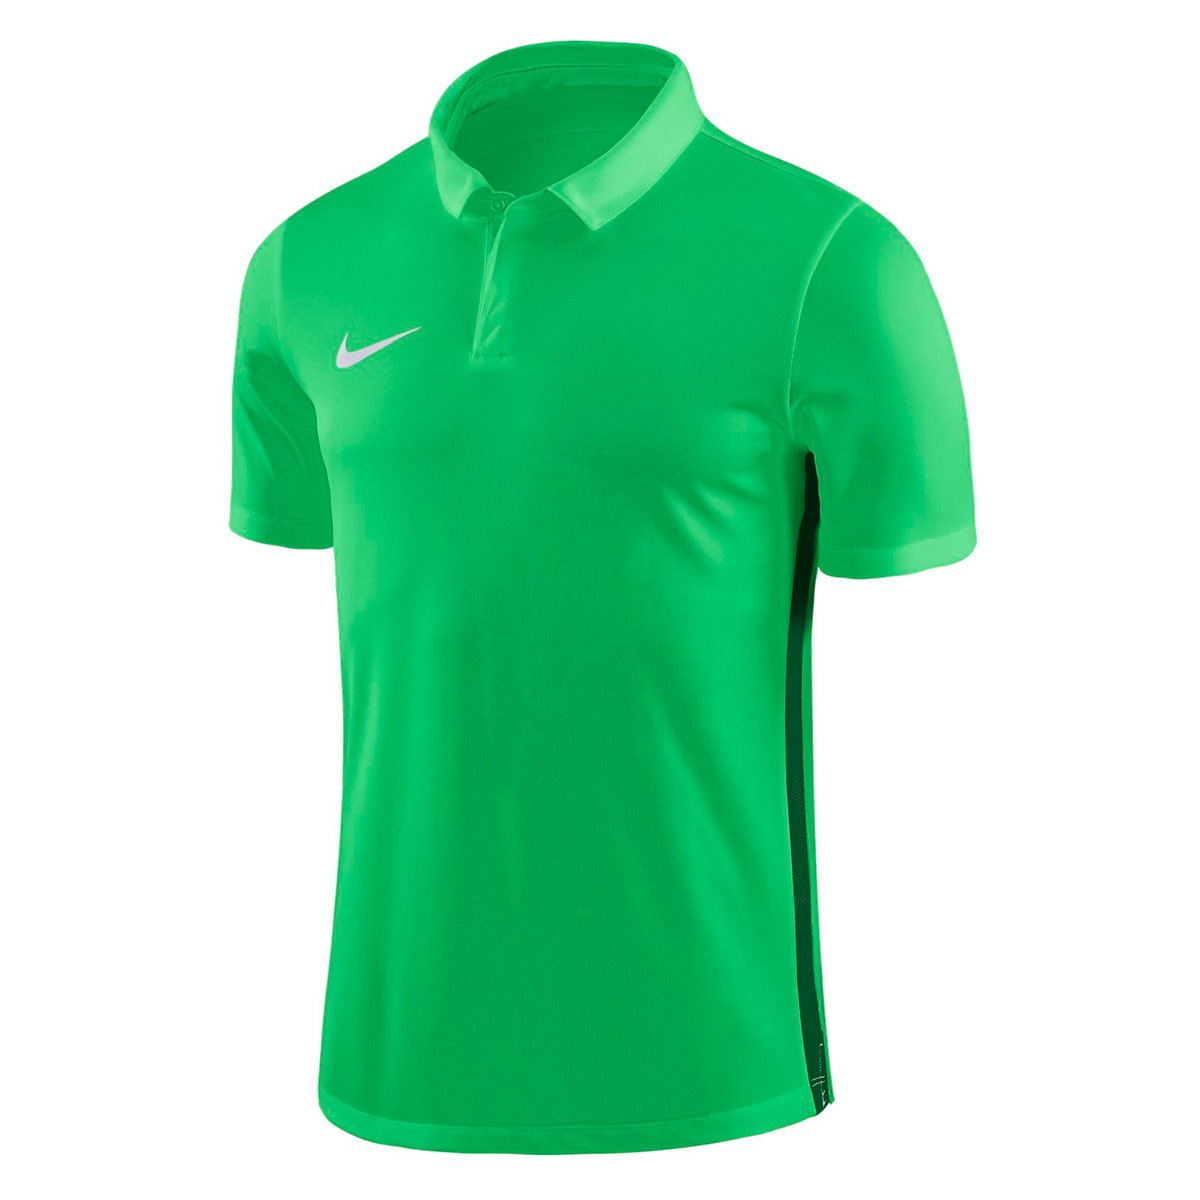 pine green nike shirt